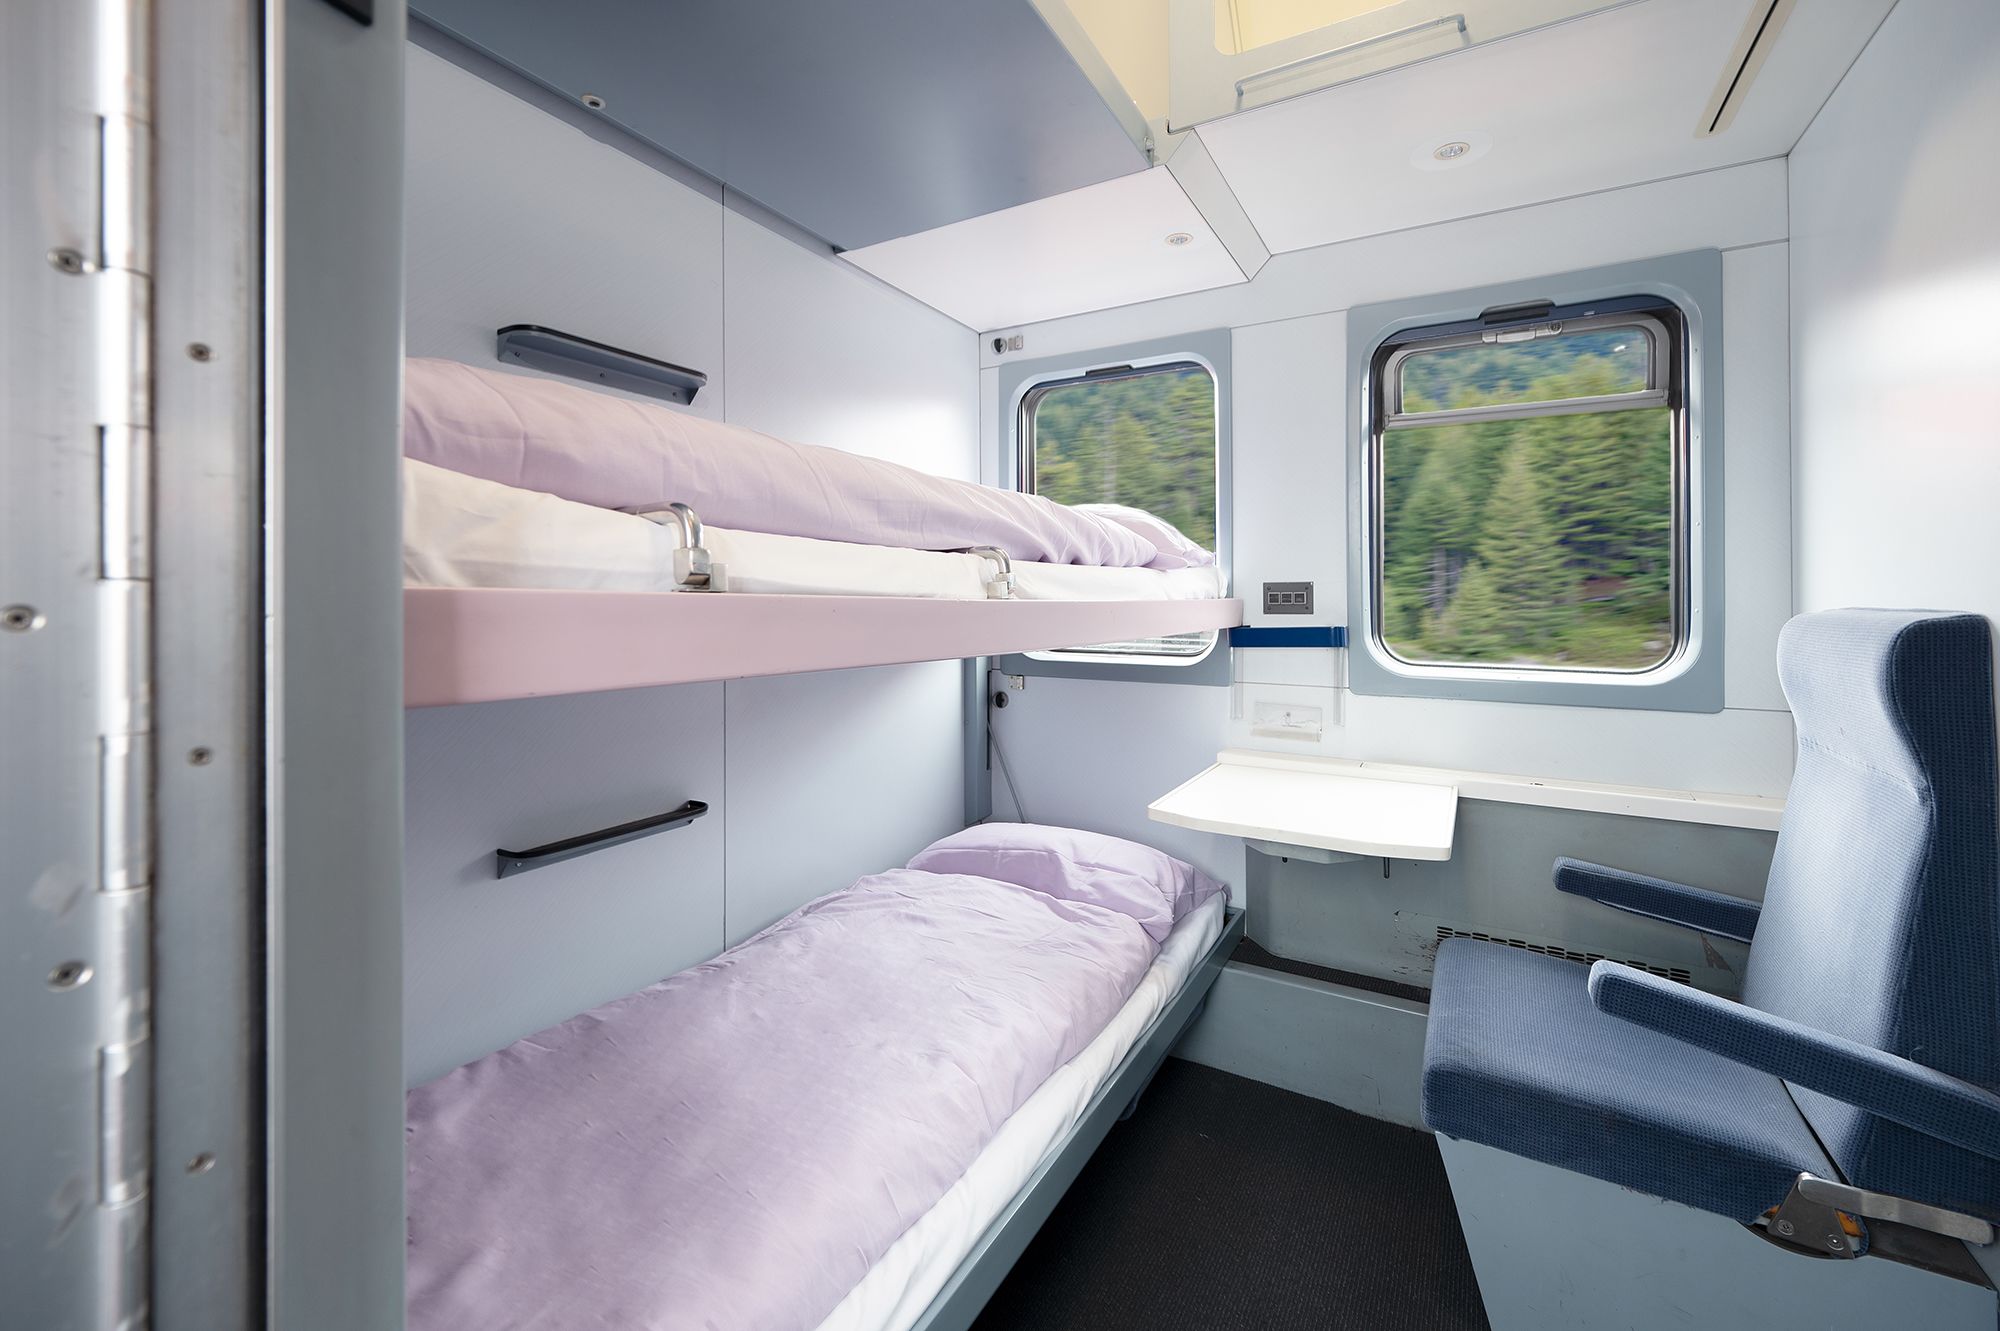 European Sleeper's cabins are already in high demand.